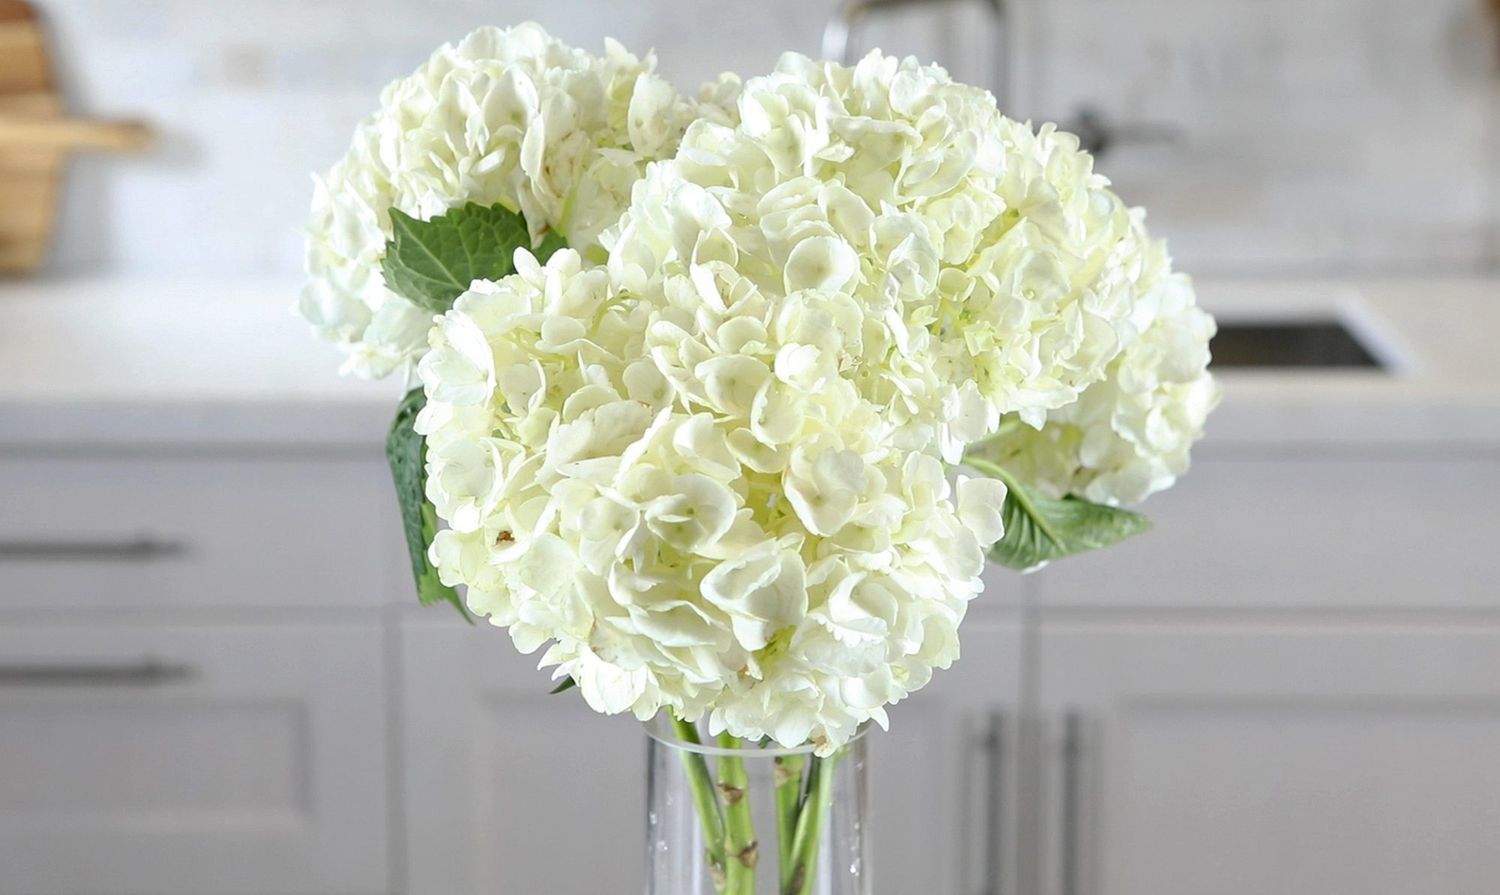 white hydrangea cuttings in glass vase in kitchen